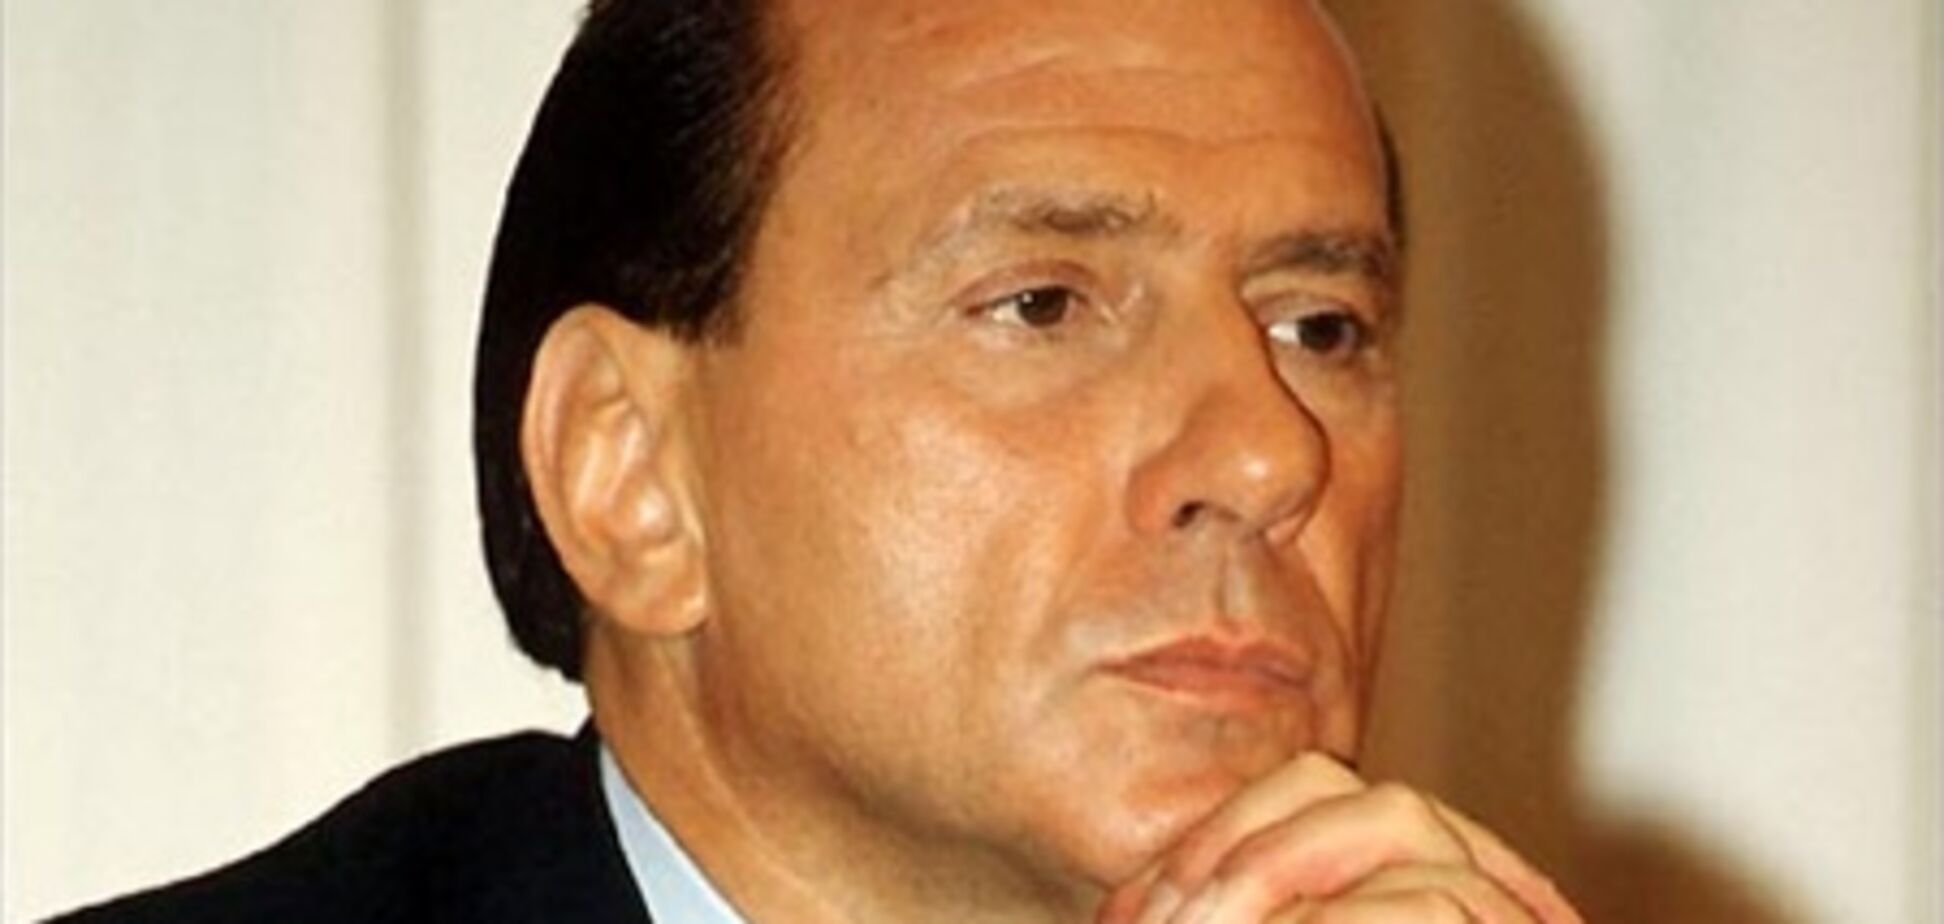 Берлускони похвалил Муссолини